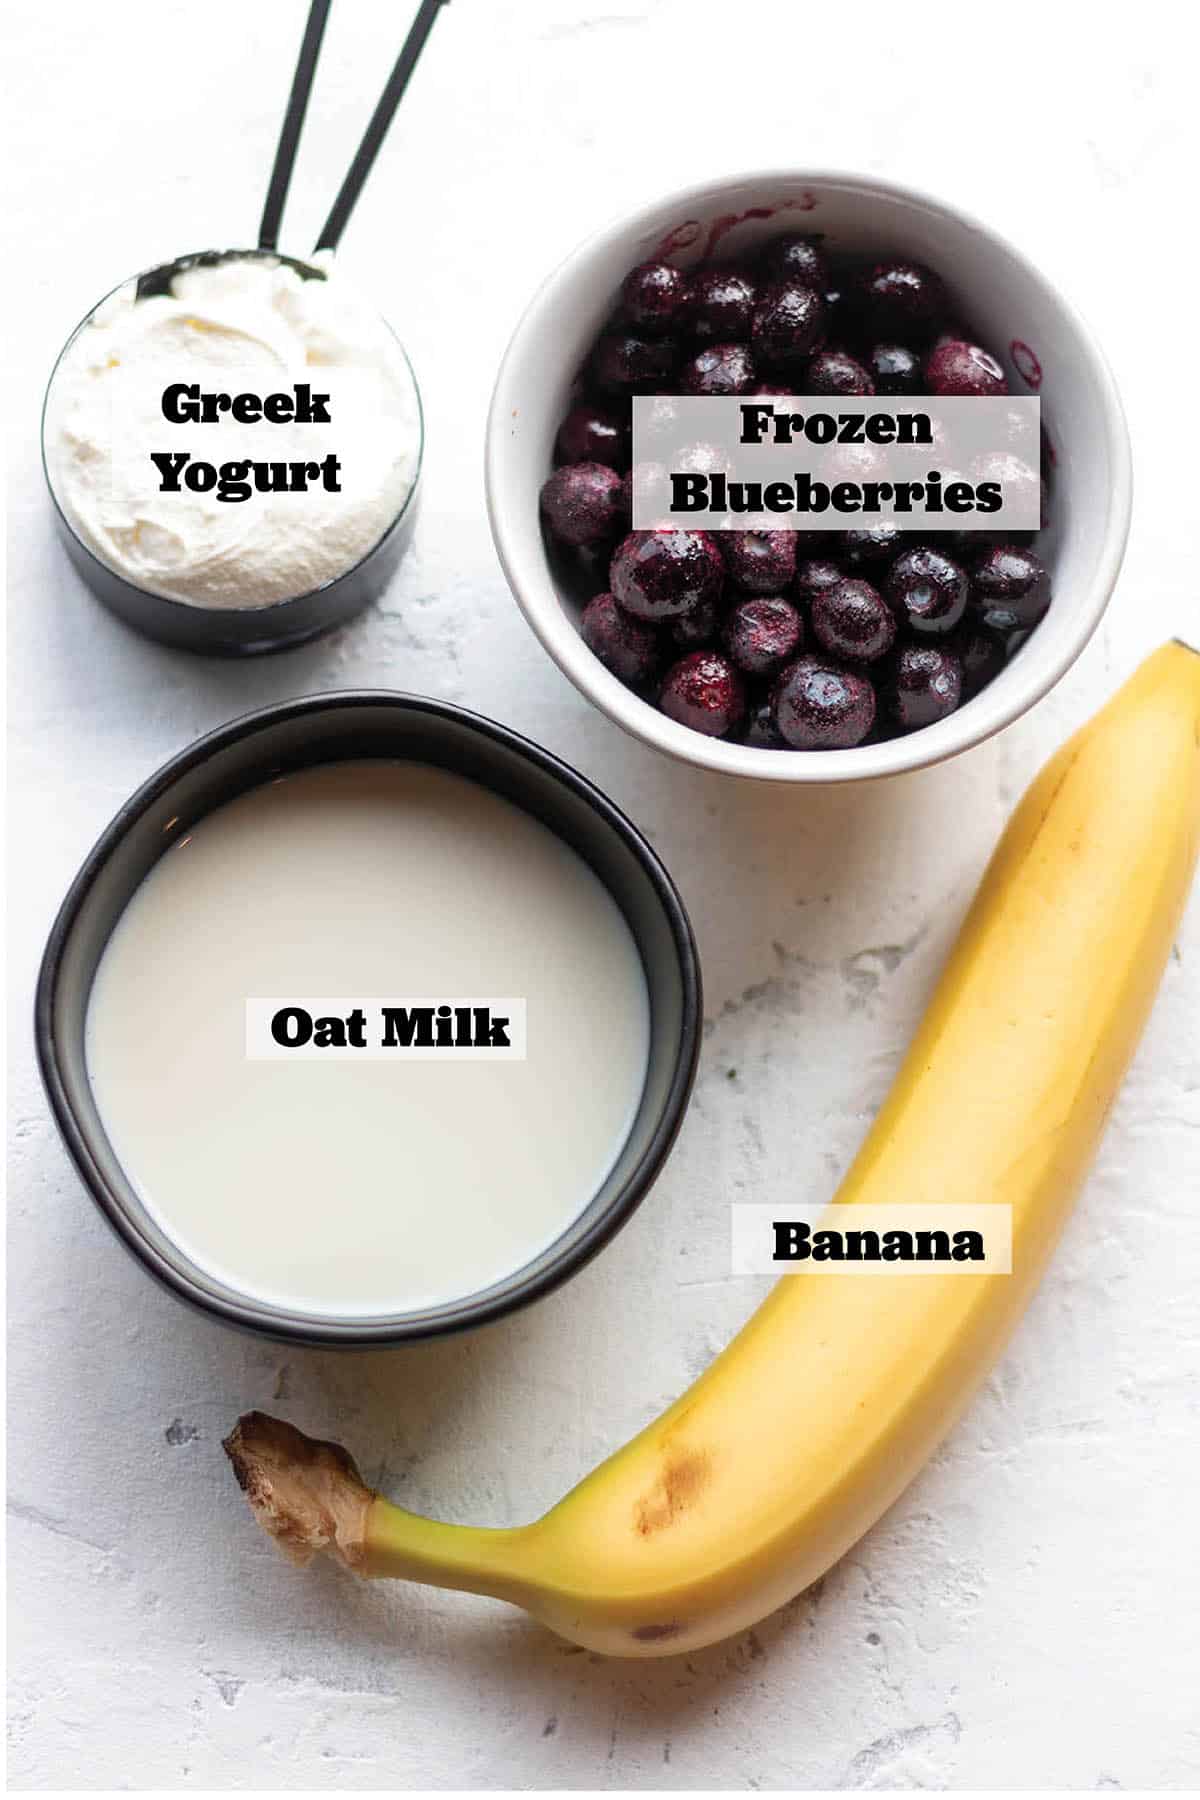 Greek Yogurt, oat milk, banana, and a bowl of blueberries.